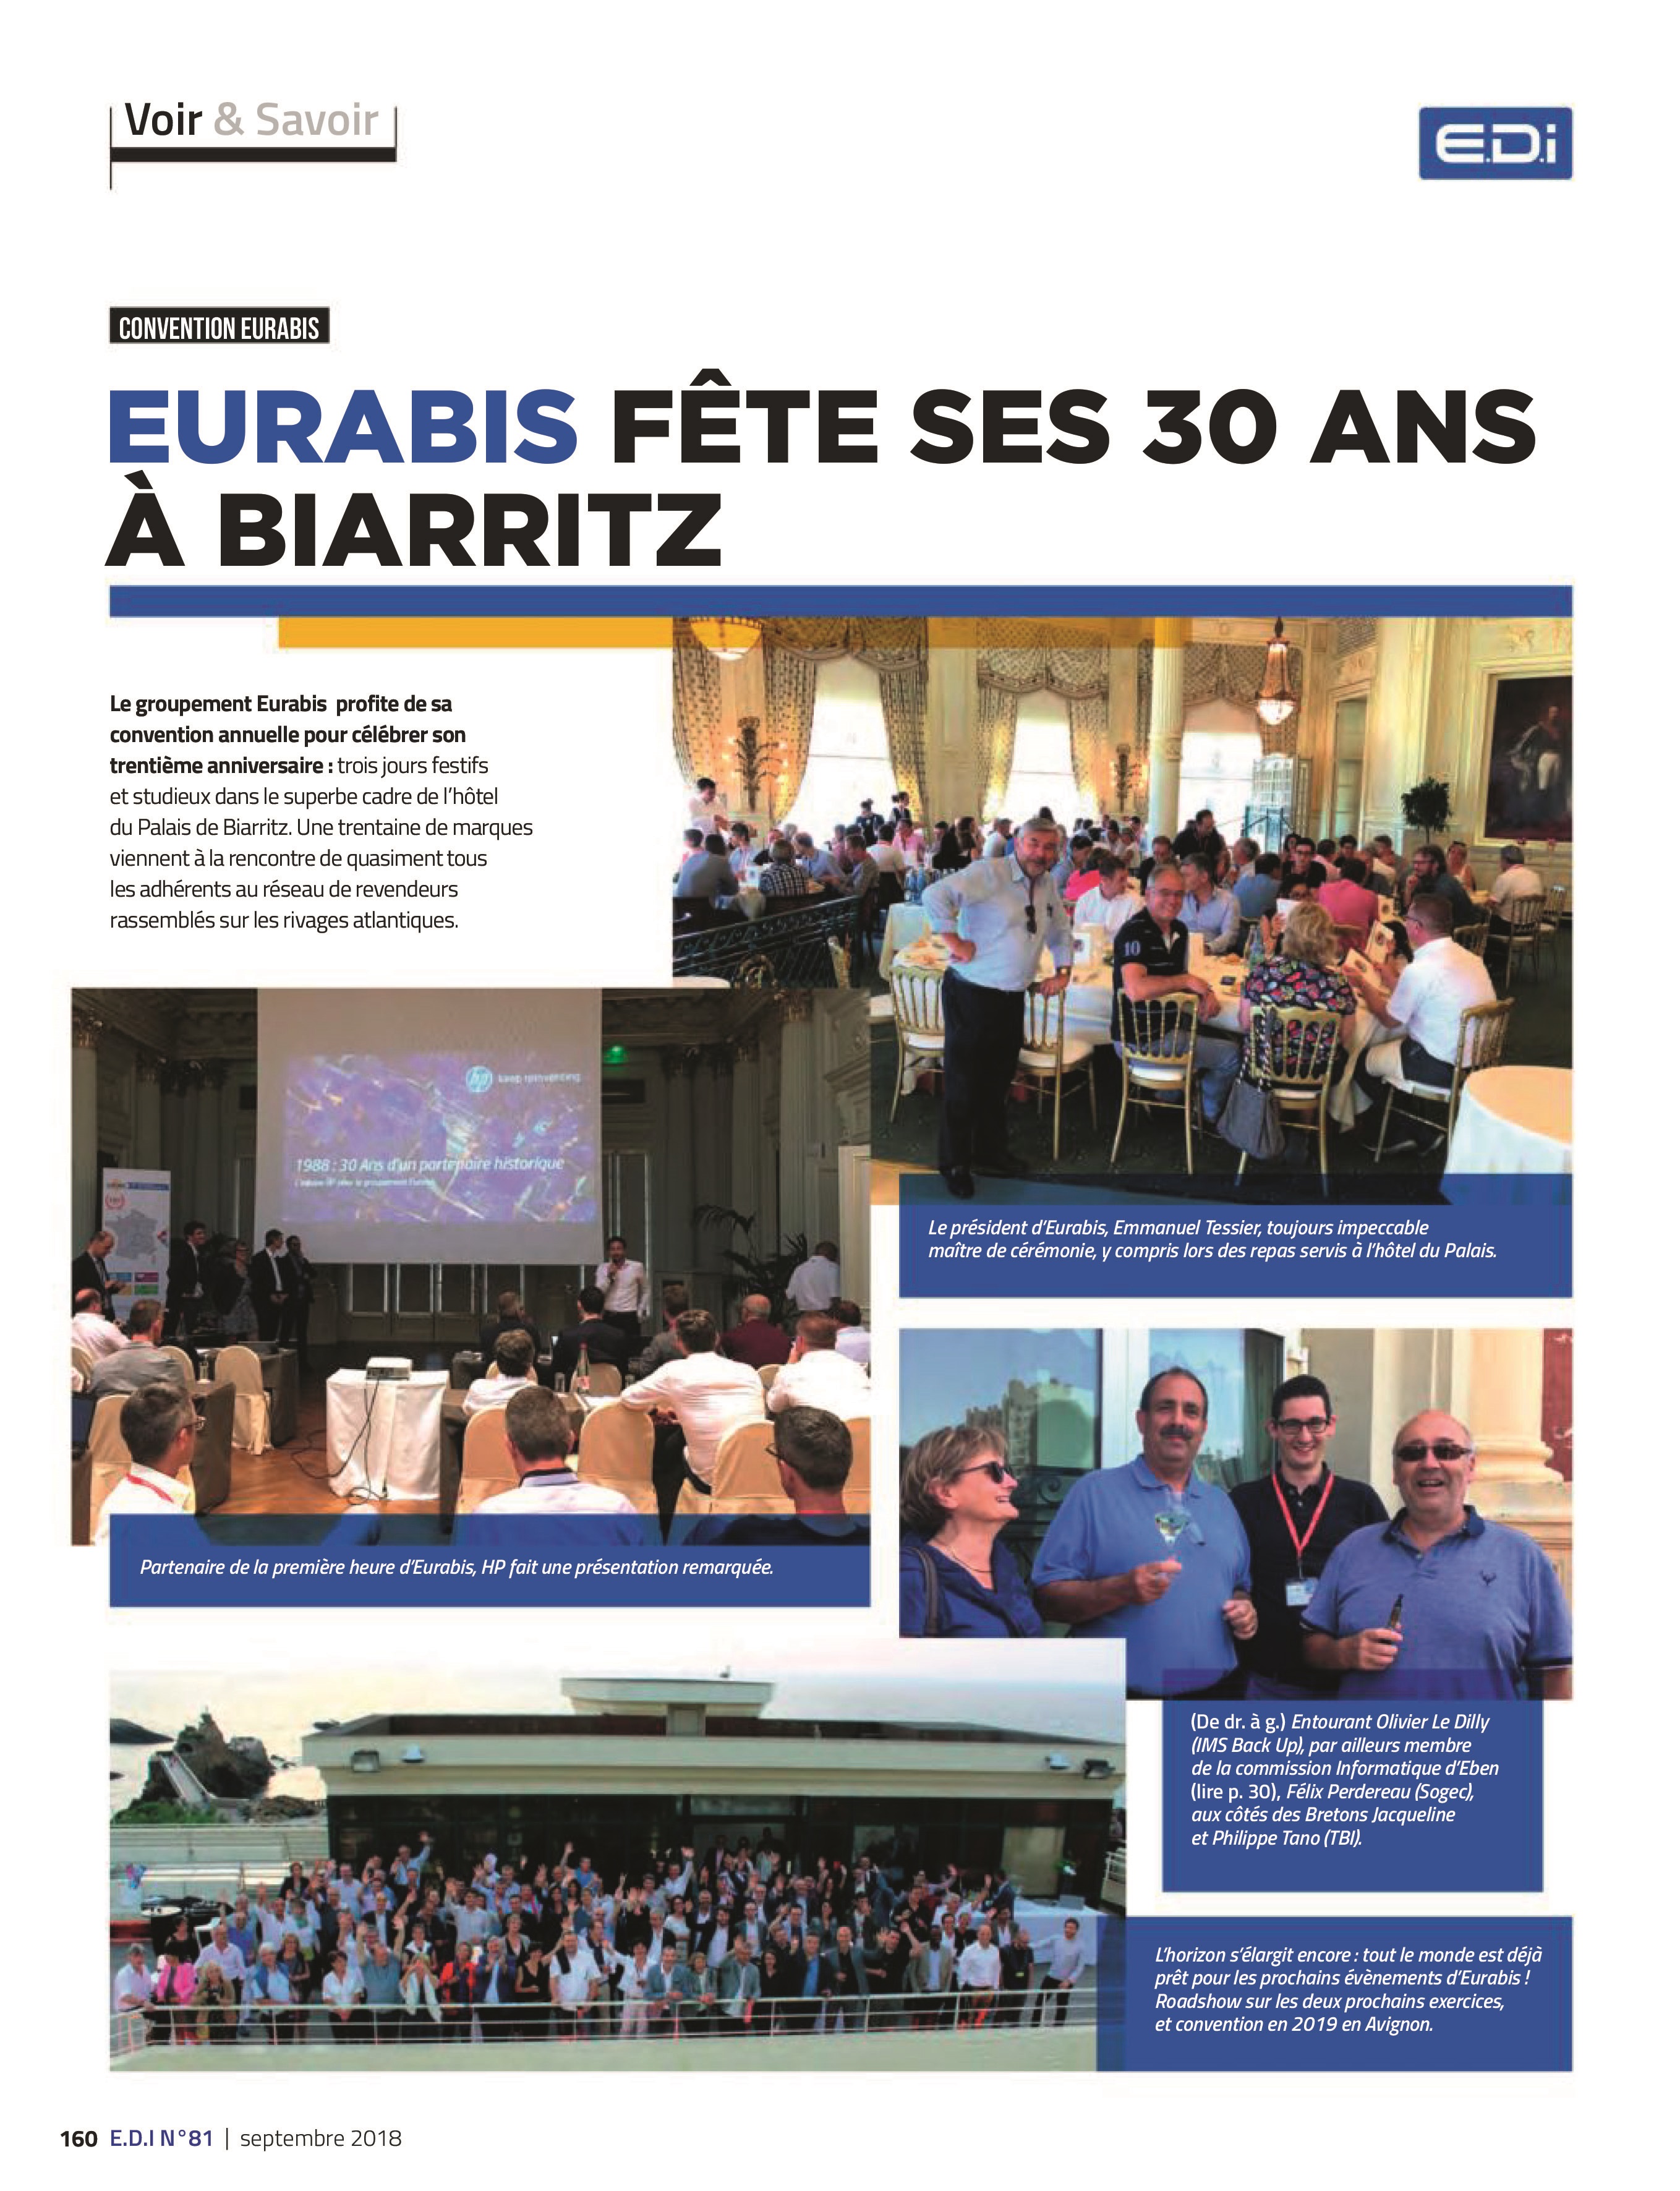 EURABIS fête ses 30 ans à Biarritz